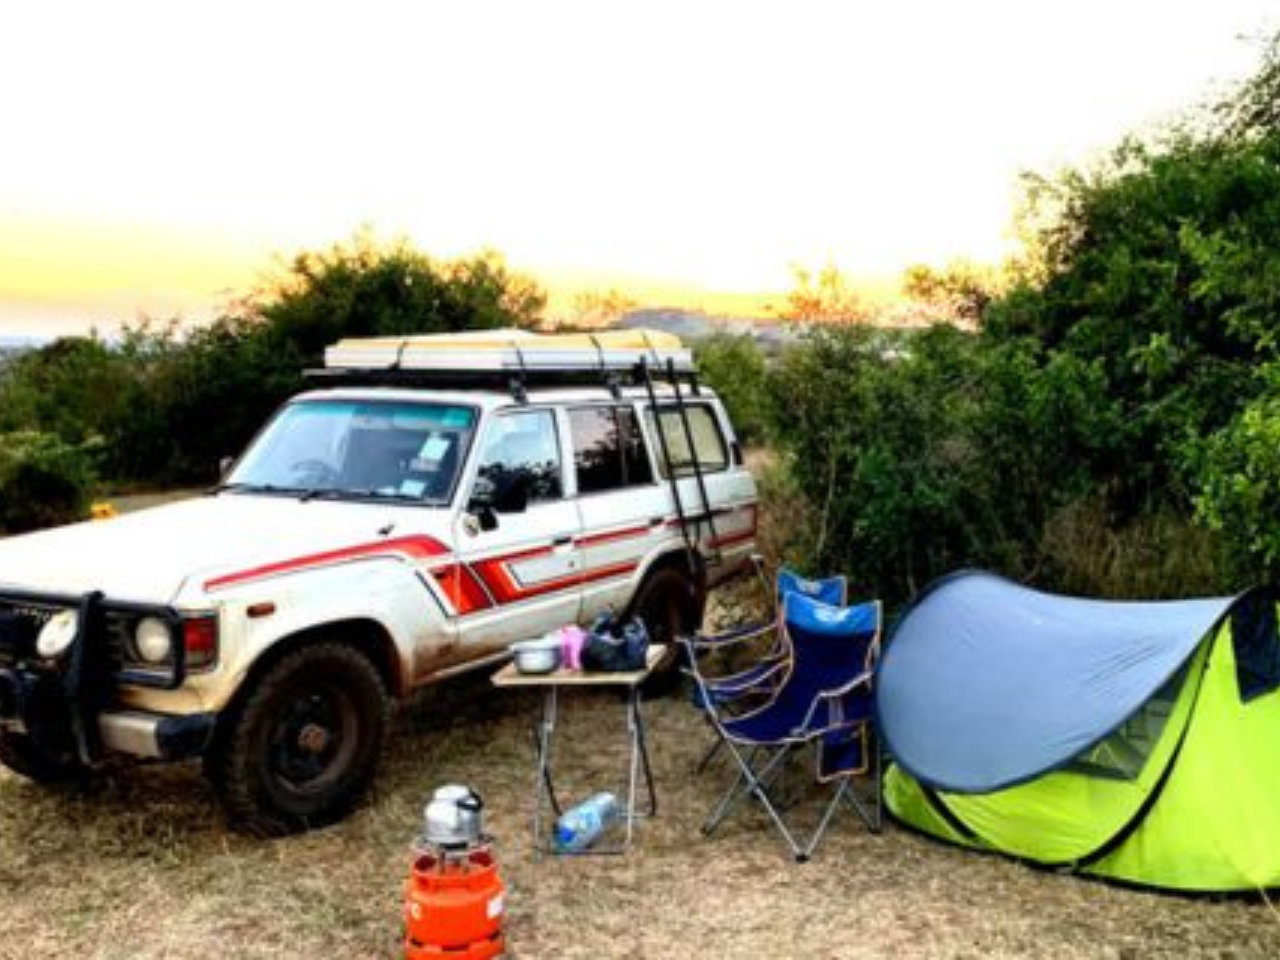 Car rental Tanzania with camping gear